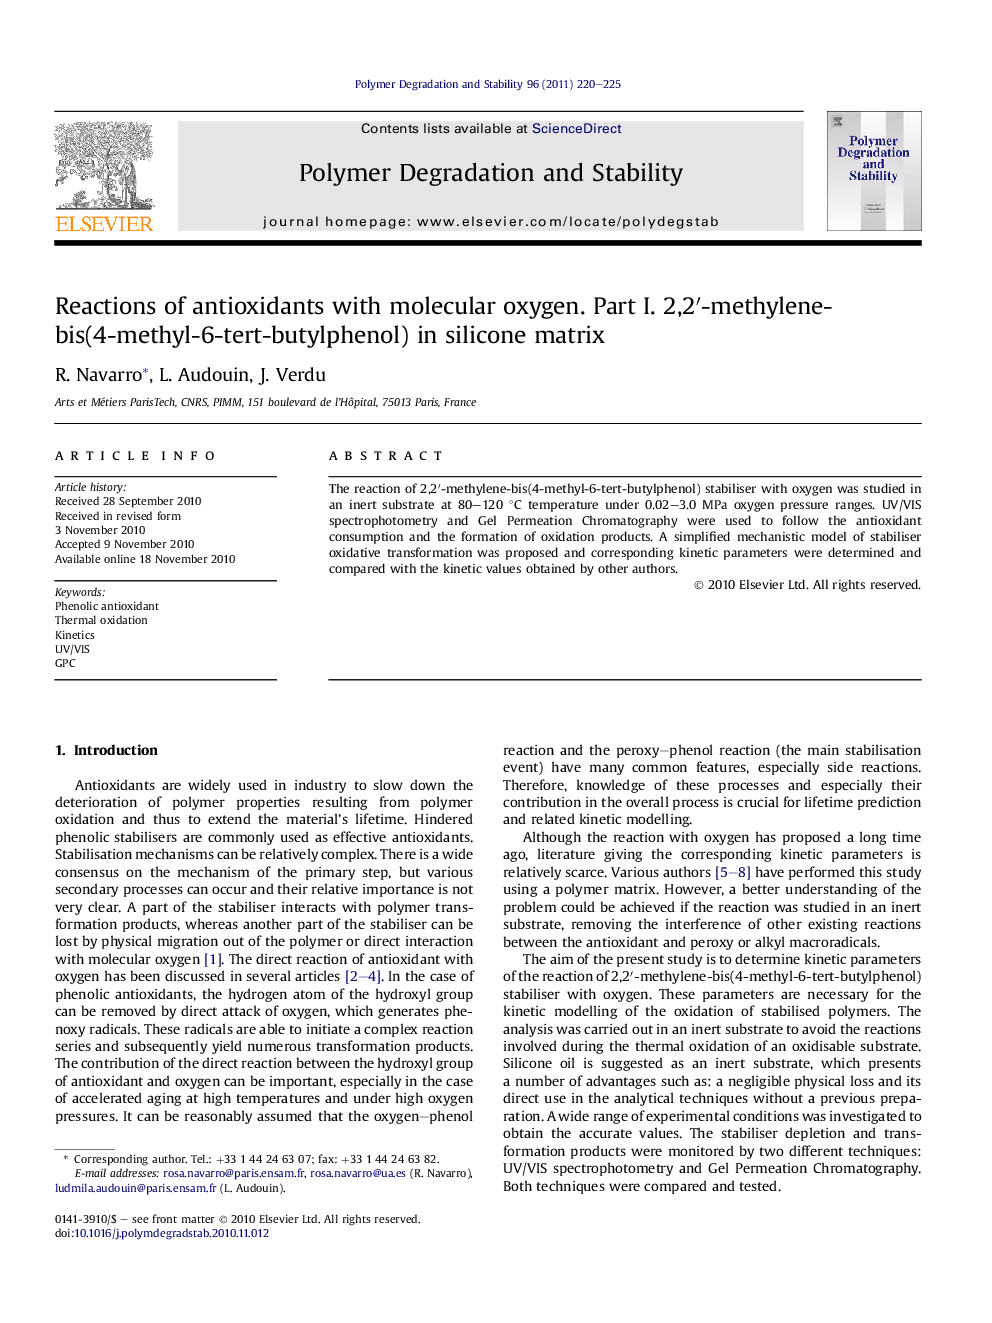 Reactions of antioxidants with molecular oxygen. Part I. 2,2â²-methylene-bis(4-methyl-6-tert-butylphenol) in silicone matrix